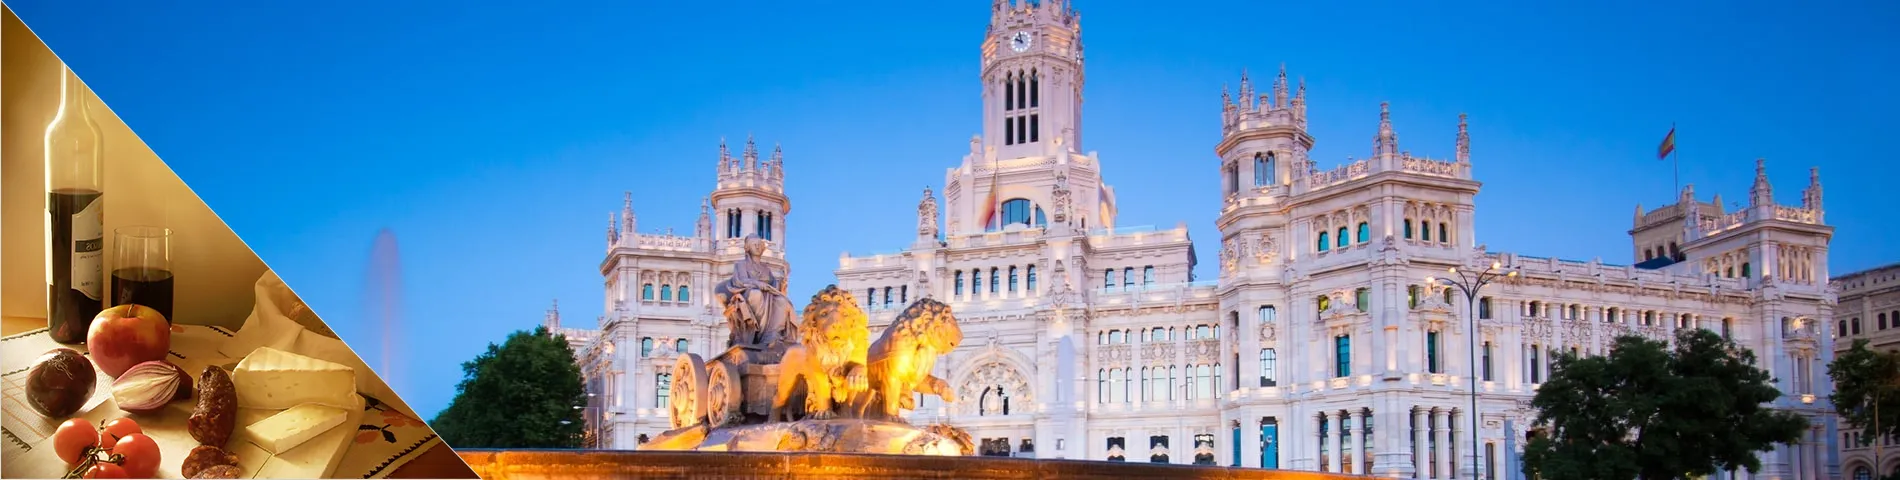 Madrid - Spagnolo & Cultura